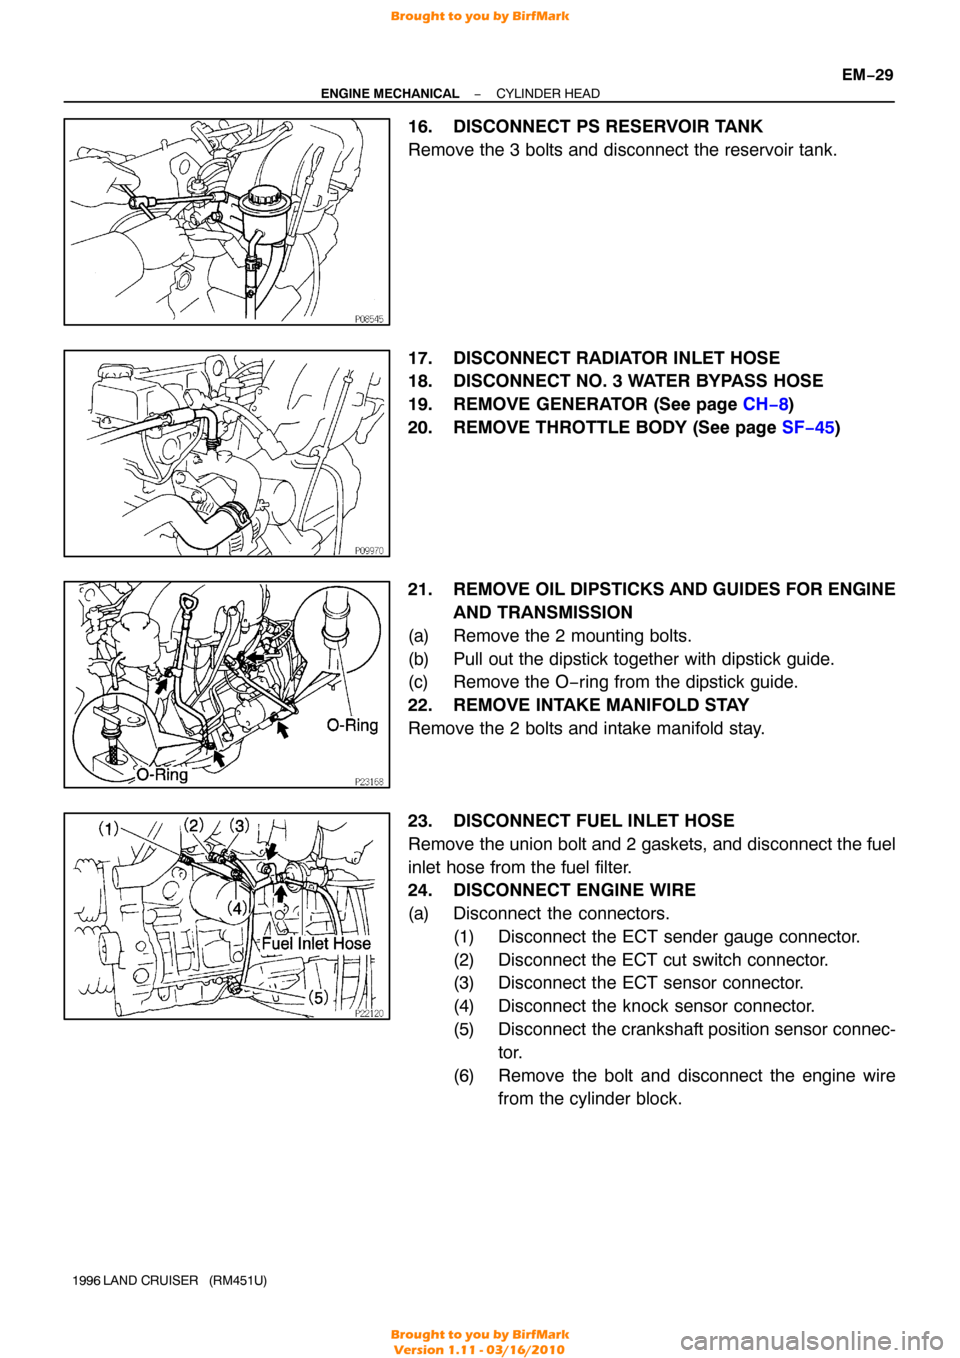 TOYOTA LAND CRUISER 1996 J80 Service Manual −
ENGINE MECHANICAL CYLINDER HEAD
EM−29
1996 LAND CRUISER   (RM451U)
16. DISCONNECT PS RESERVOIR TANK
Remove the 3 bolts and disconnect the reservoir tank.
17. DISCONNECT RADIATOR INLET HOSE
18. D